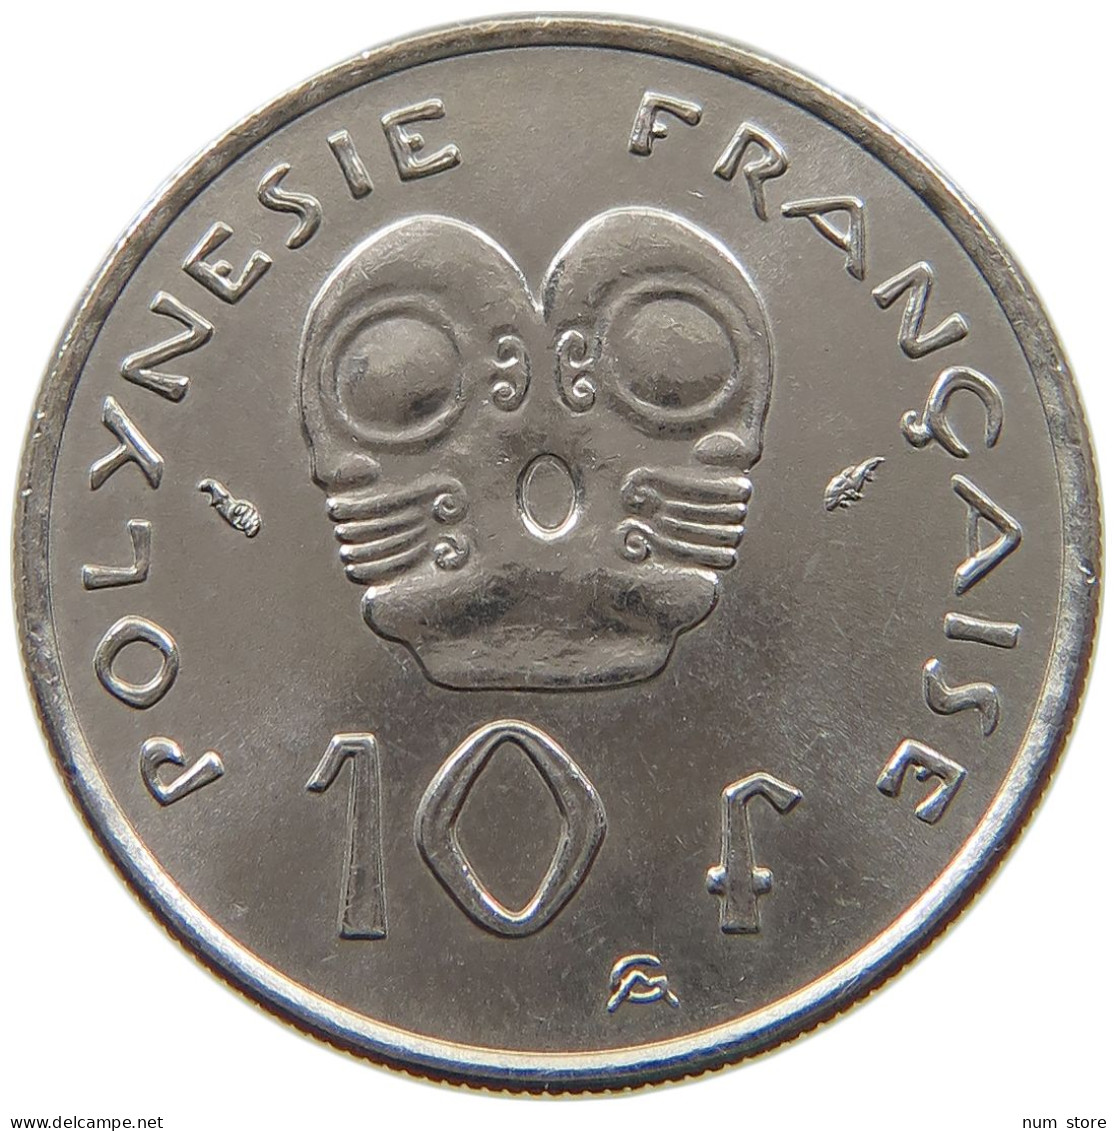 POLYNESIA 20 FRANCS 1979  #a031 0089 - Polinesia Francesa